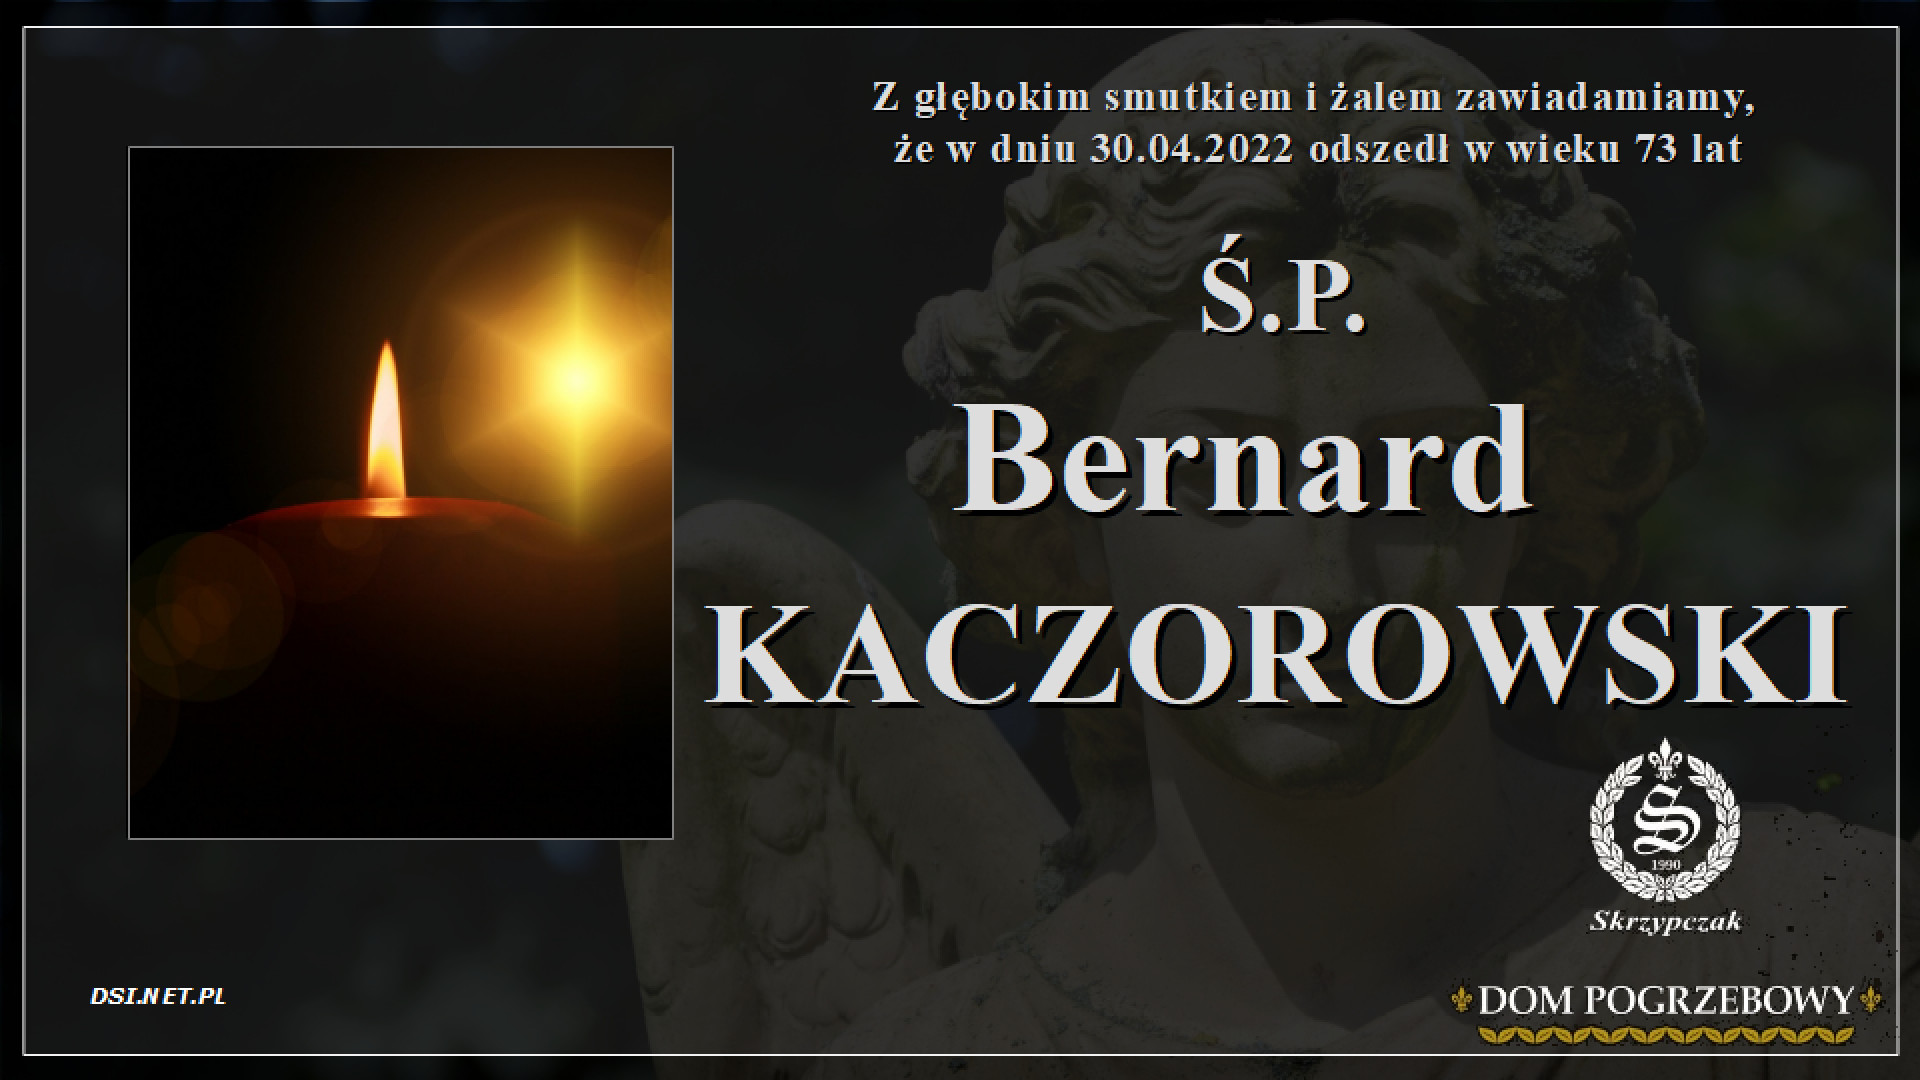 Ś.P. Bernard Kaczorowski